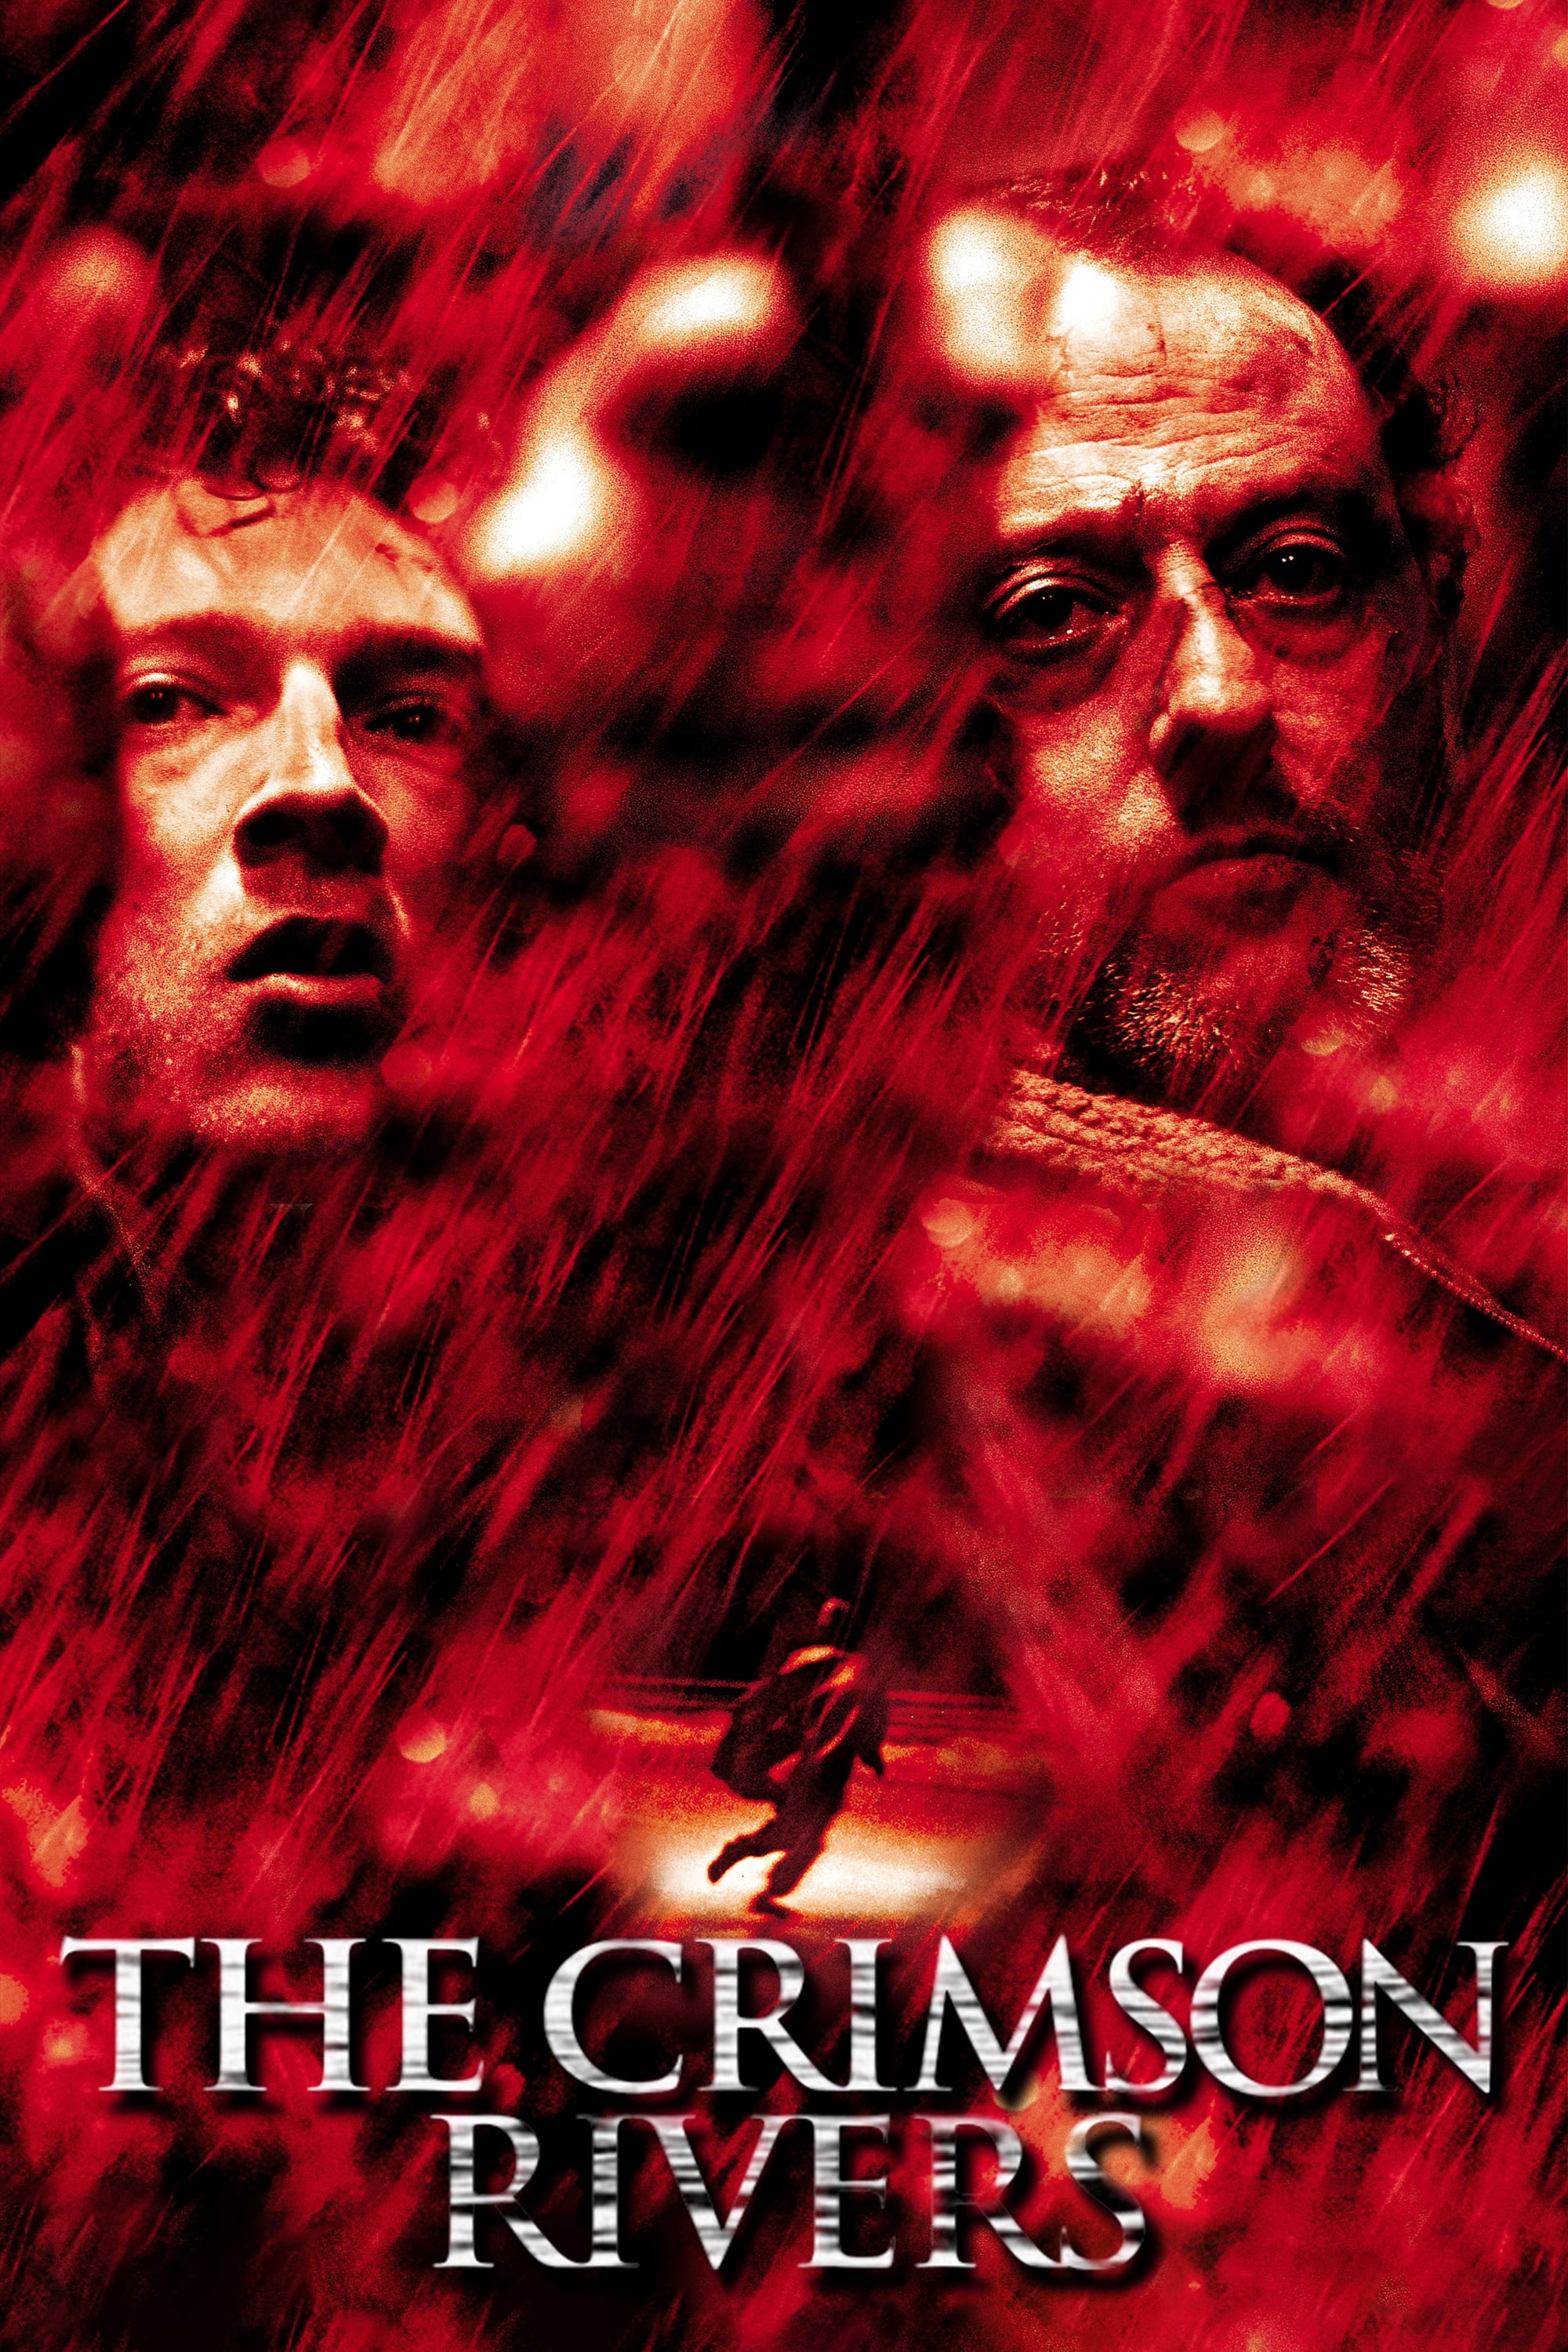 The Crimson Rivers (2000)